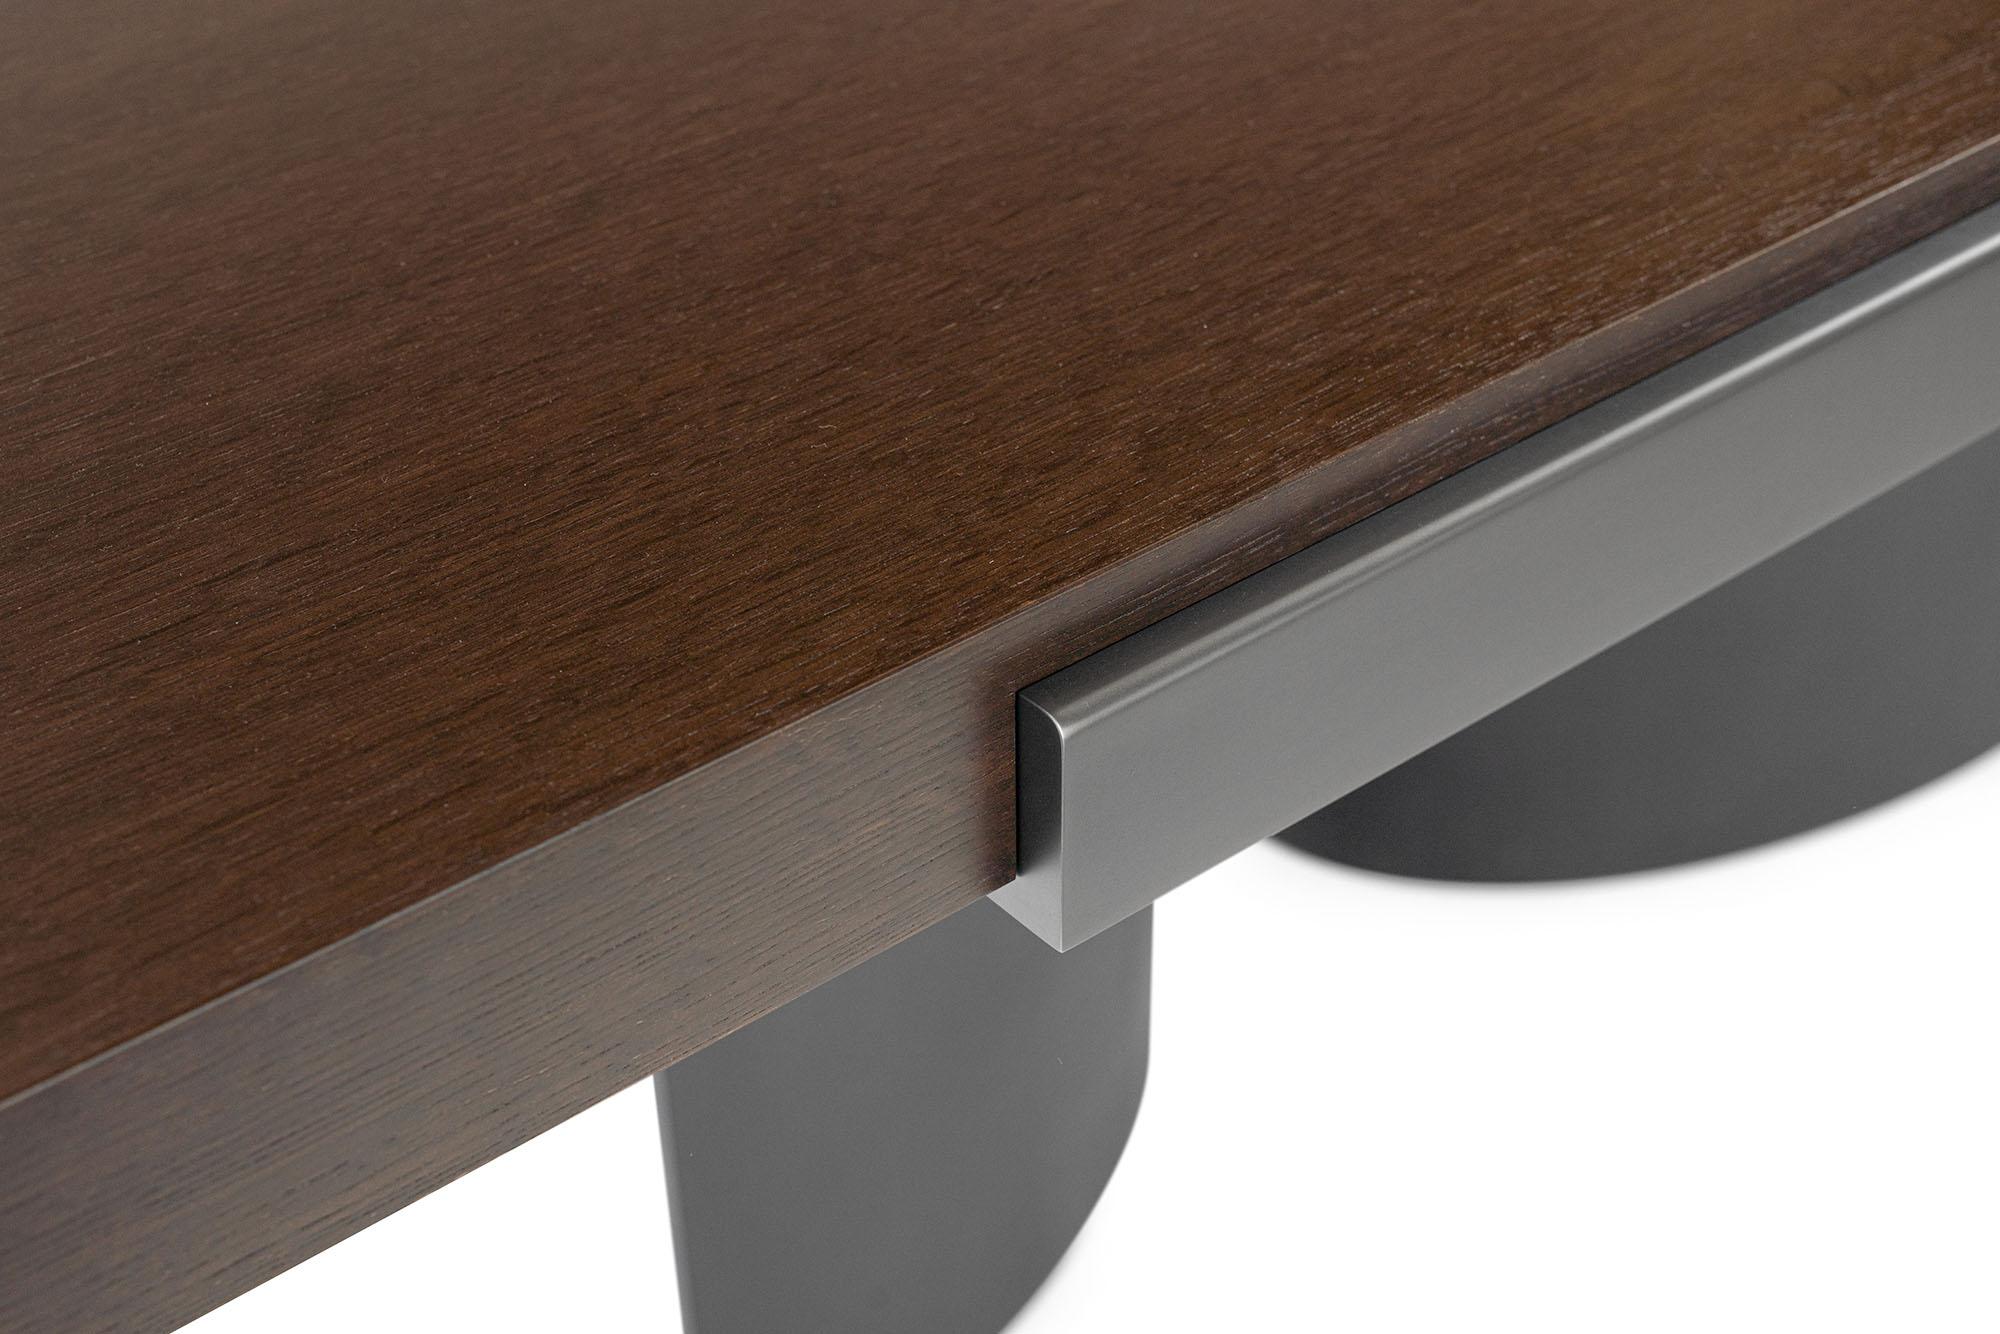 Luma Design Workshop Silo Grip Dining Table in Dark Wood and Dark Antique Metal For Sale 1